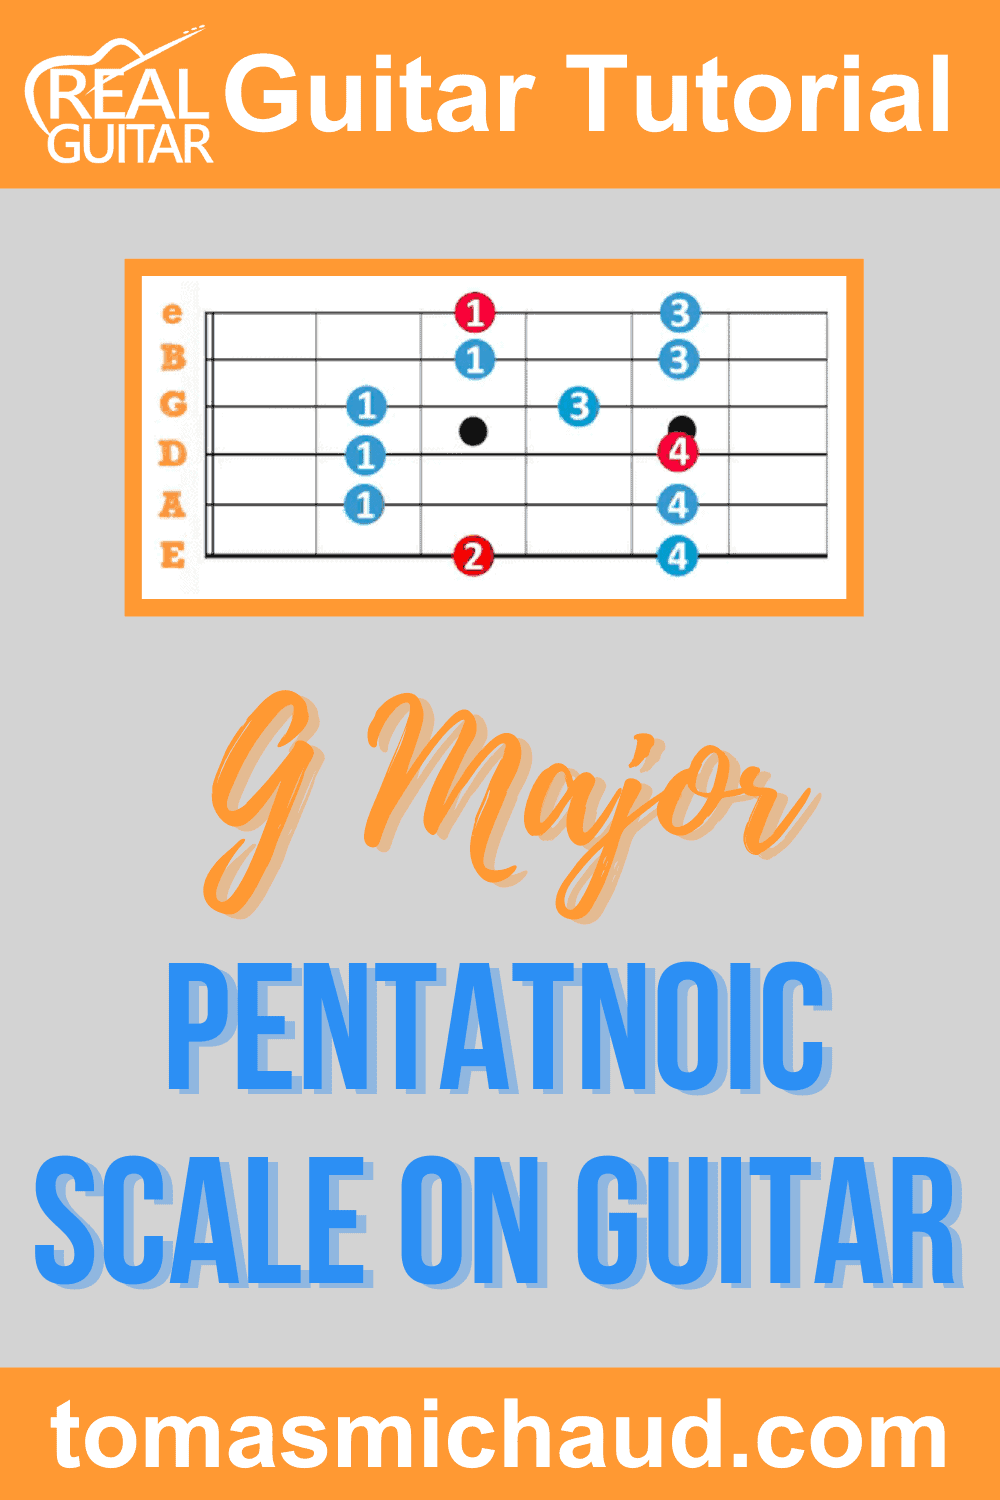 G Major Pentatonic Scale On Guitar